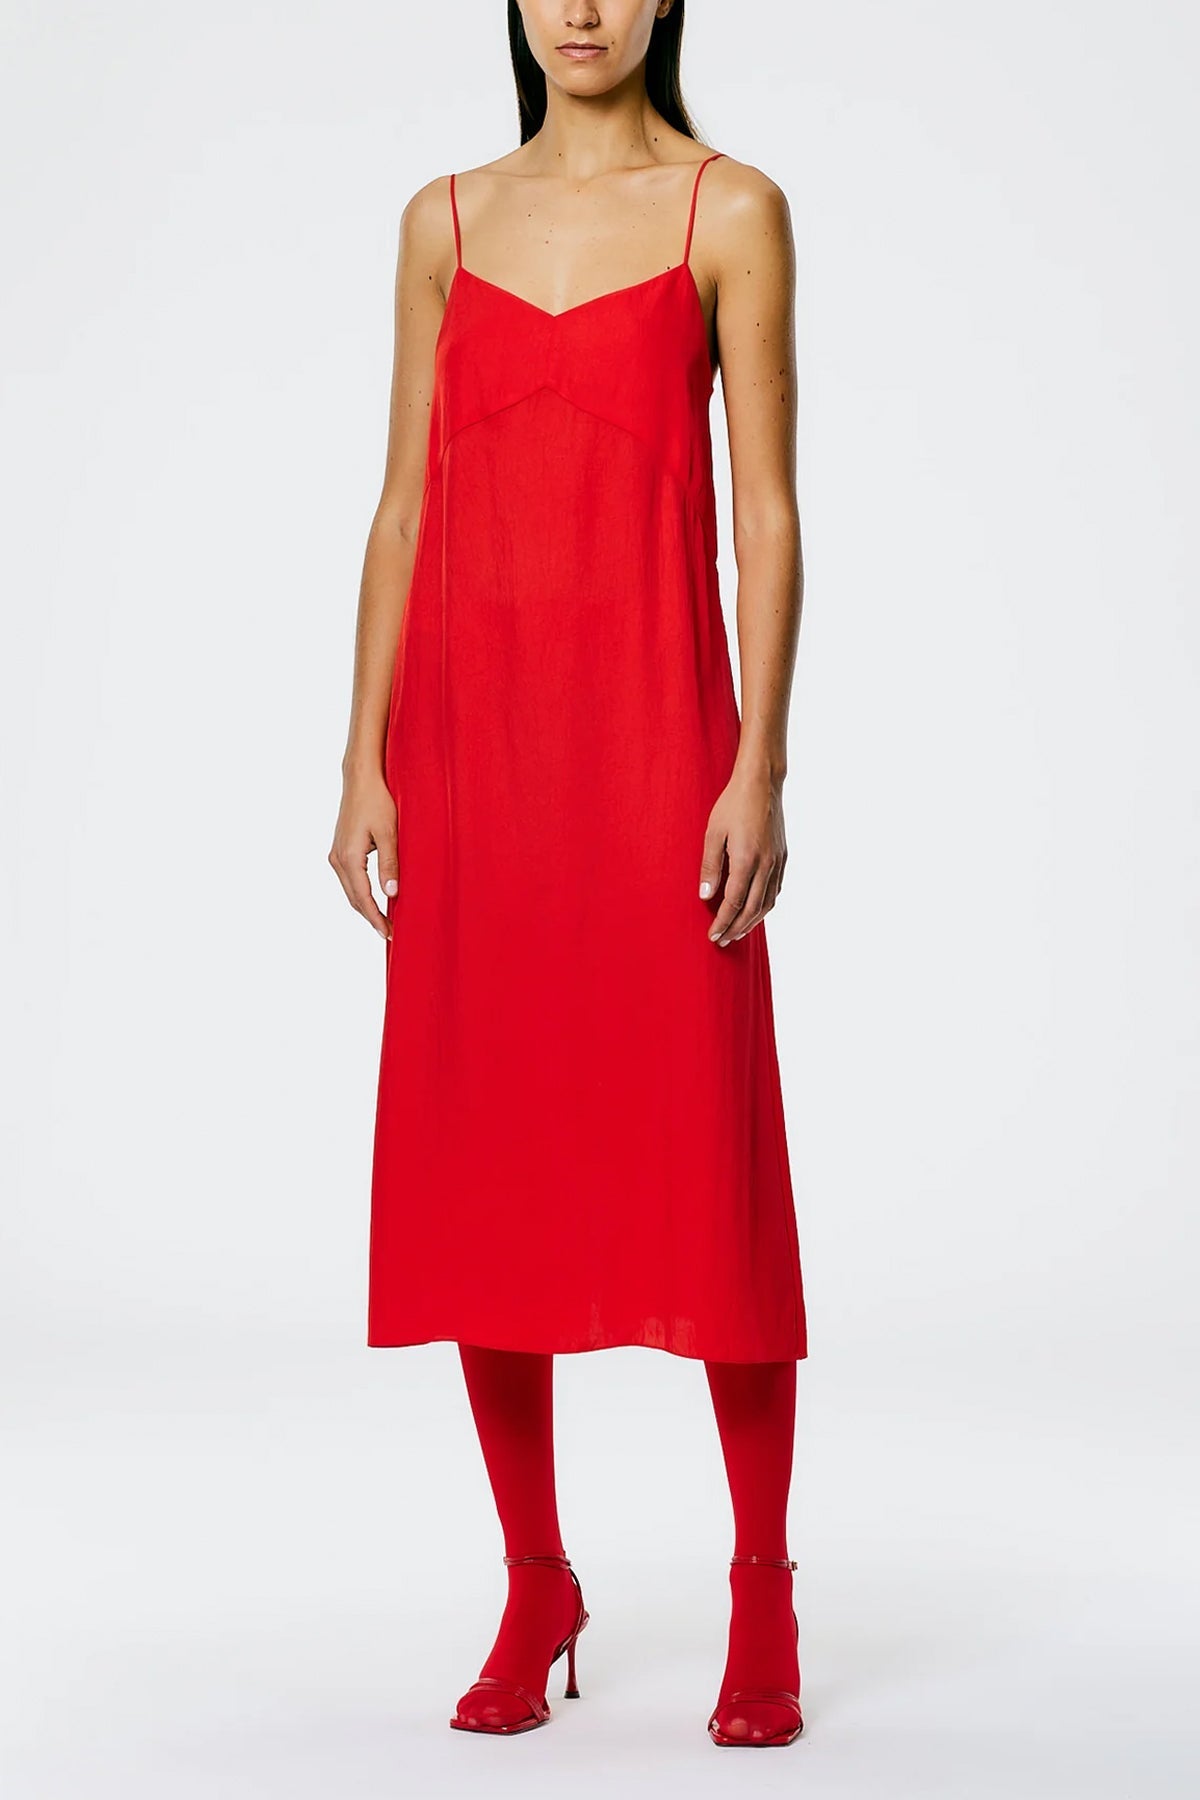 The Slip Dress in Red - shop-olivia.com